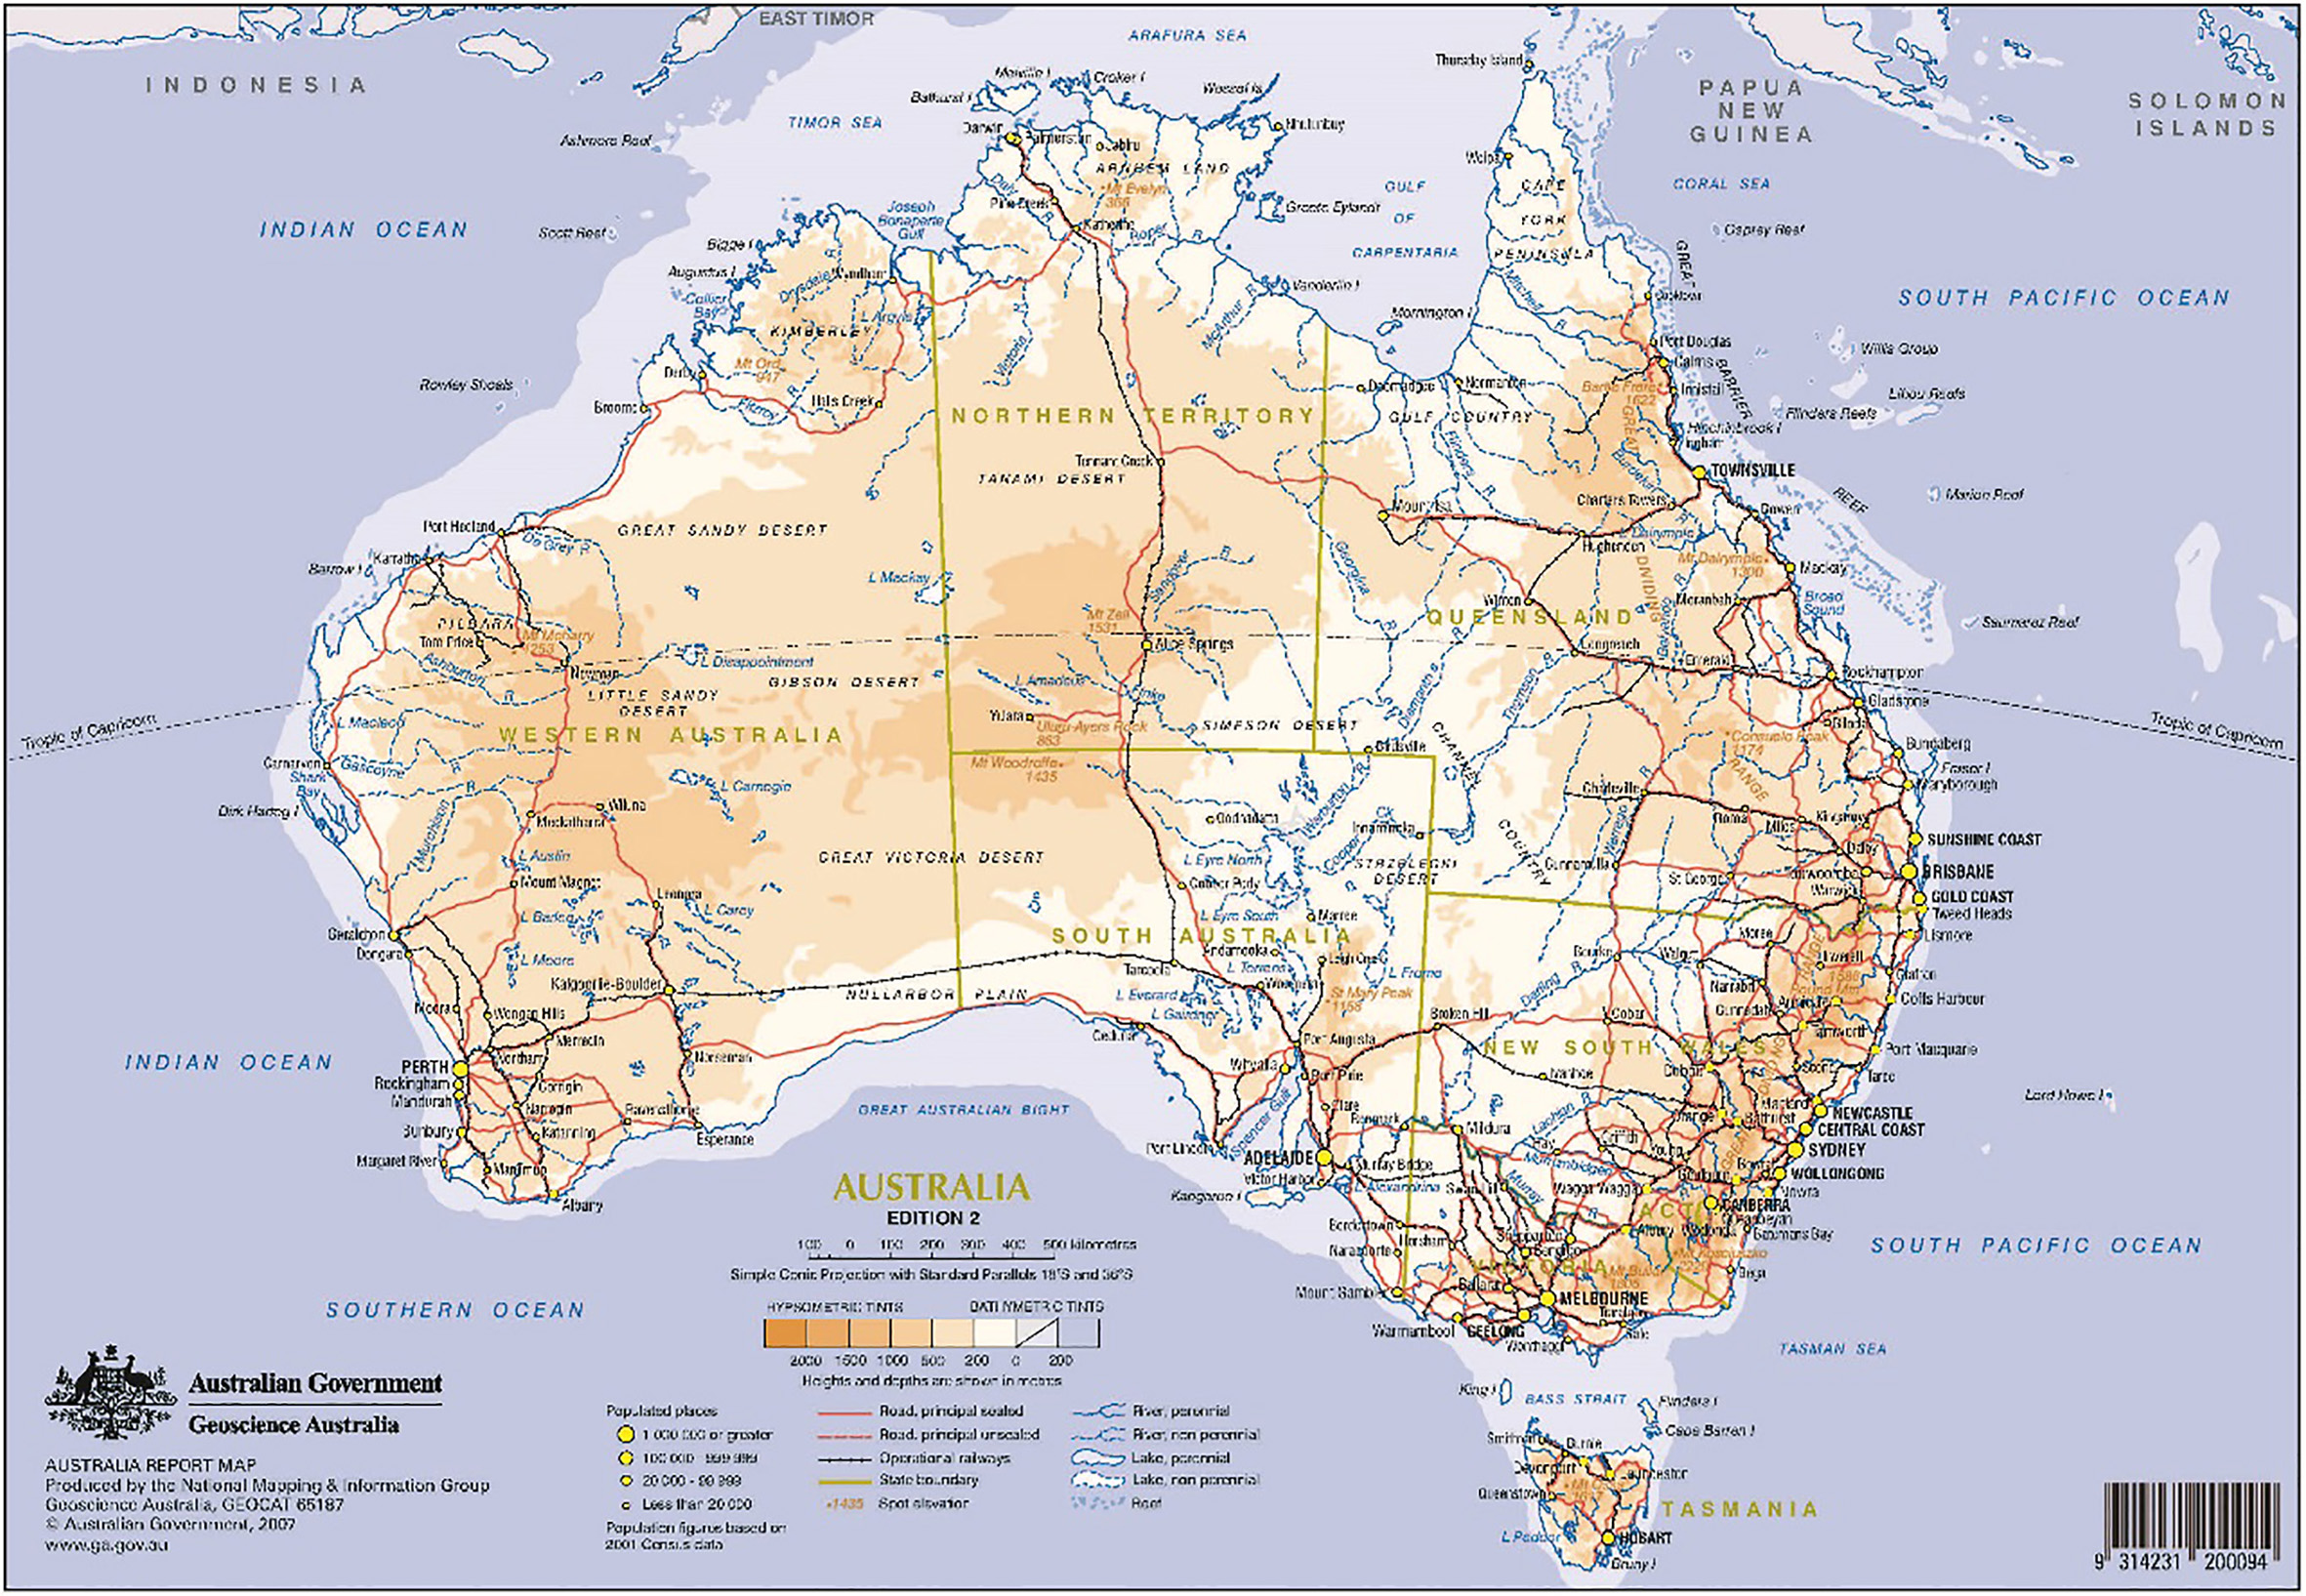 Australian map. Source: Geoscience Australia, 1993.